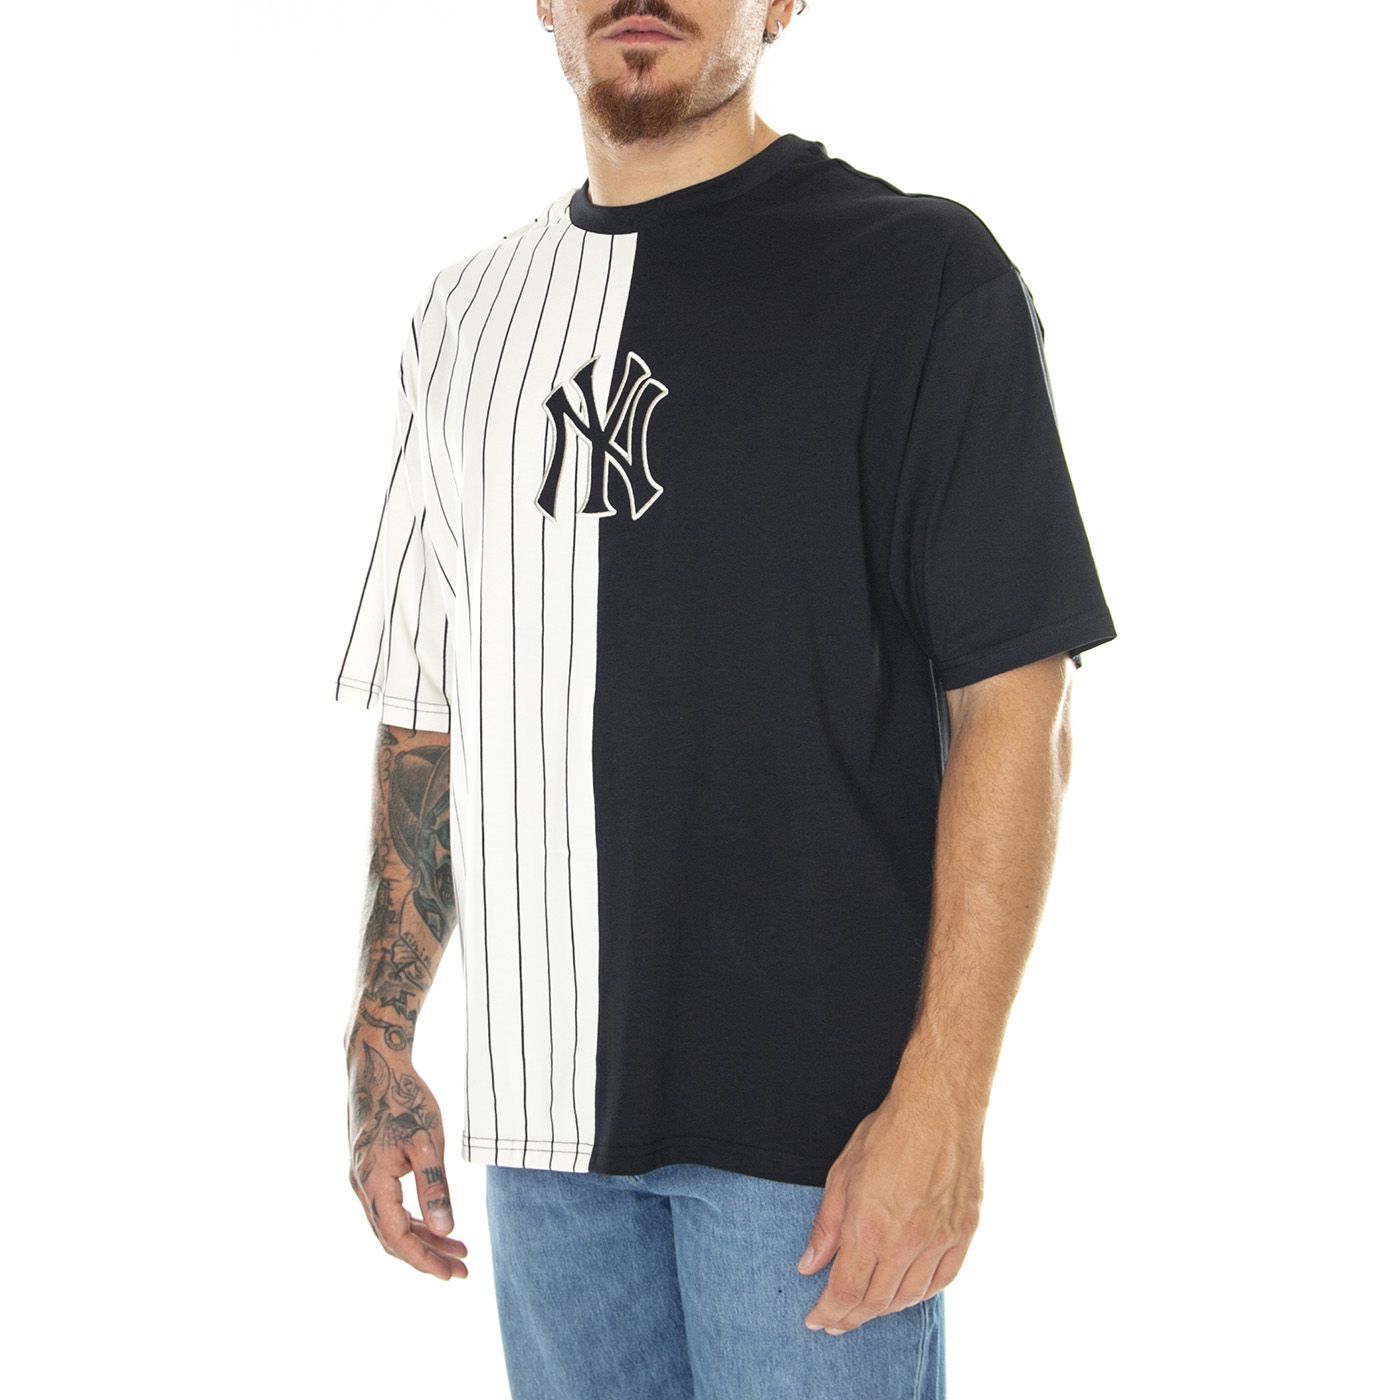 Vintage 00s Navy MLB New York Yankees Sweatshirt - Small Cotton